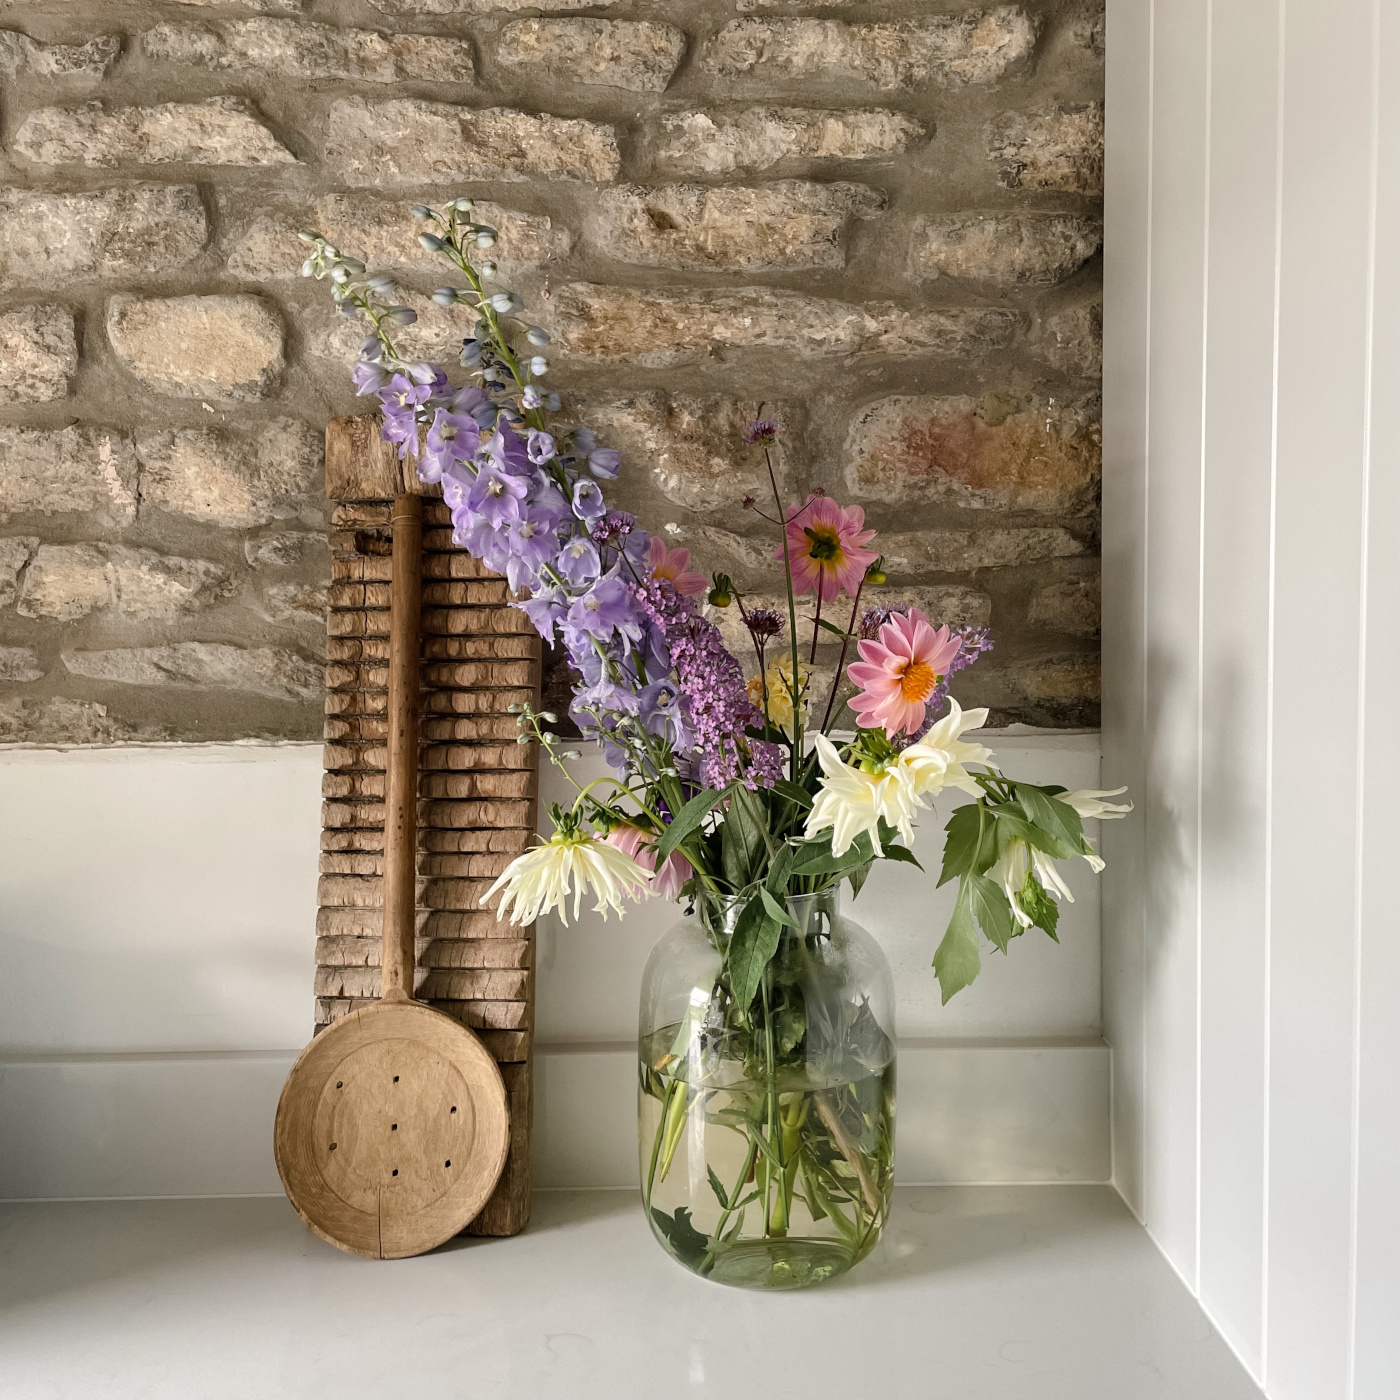 Vase cut flowers against stone wall